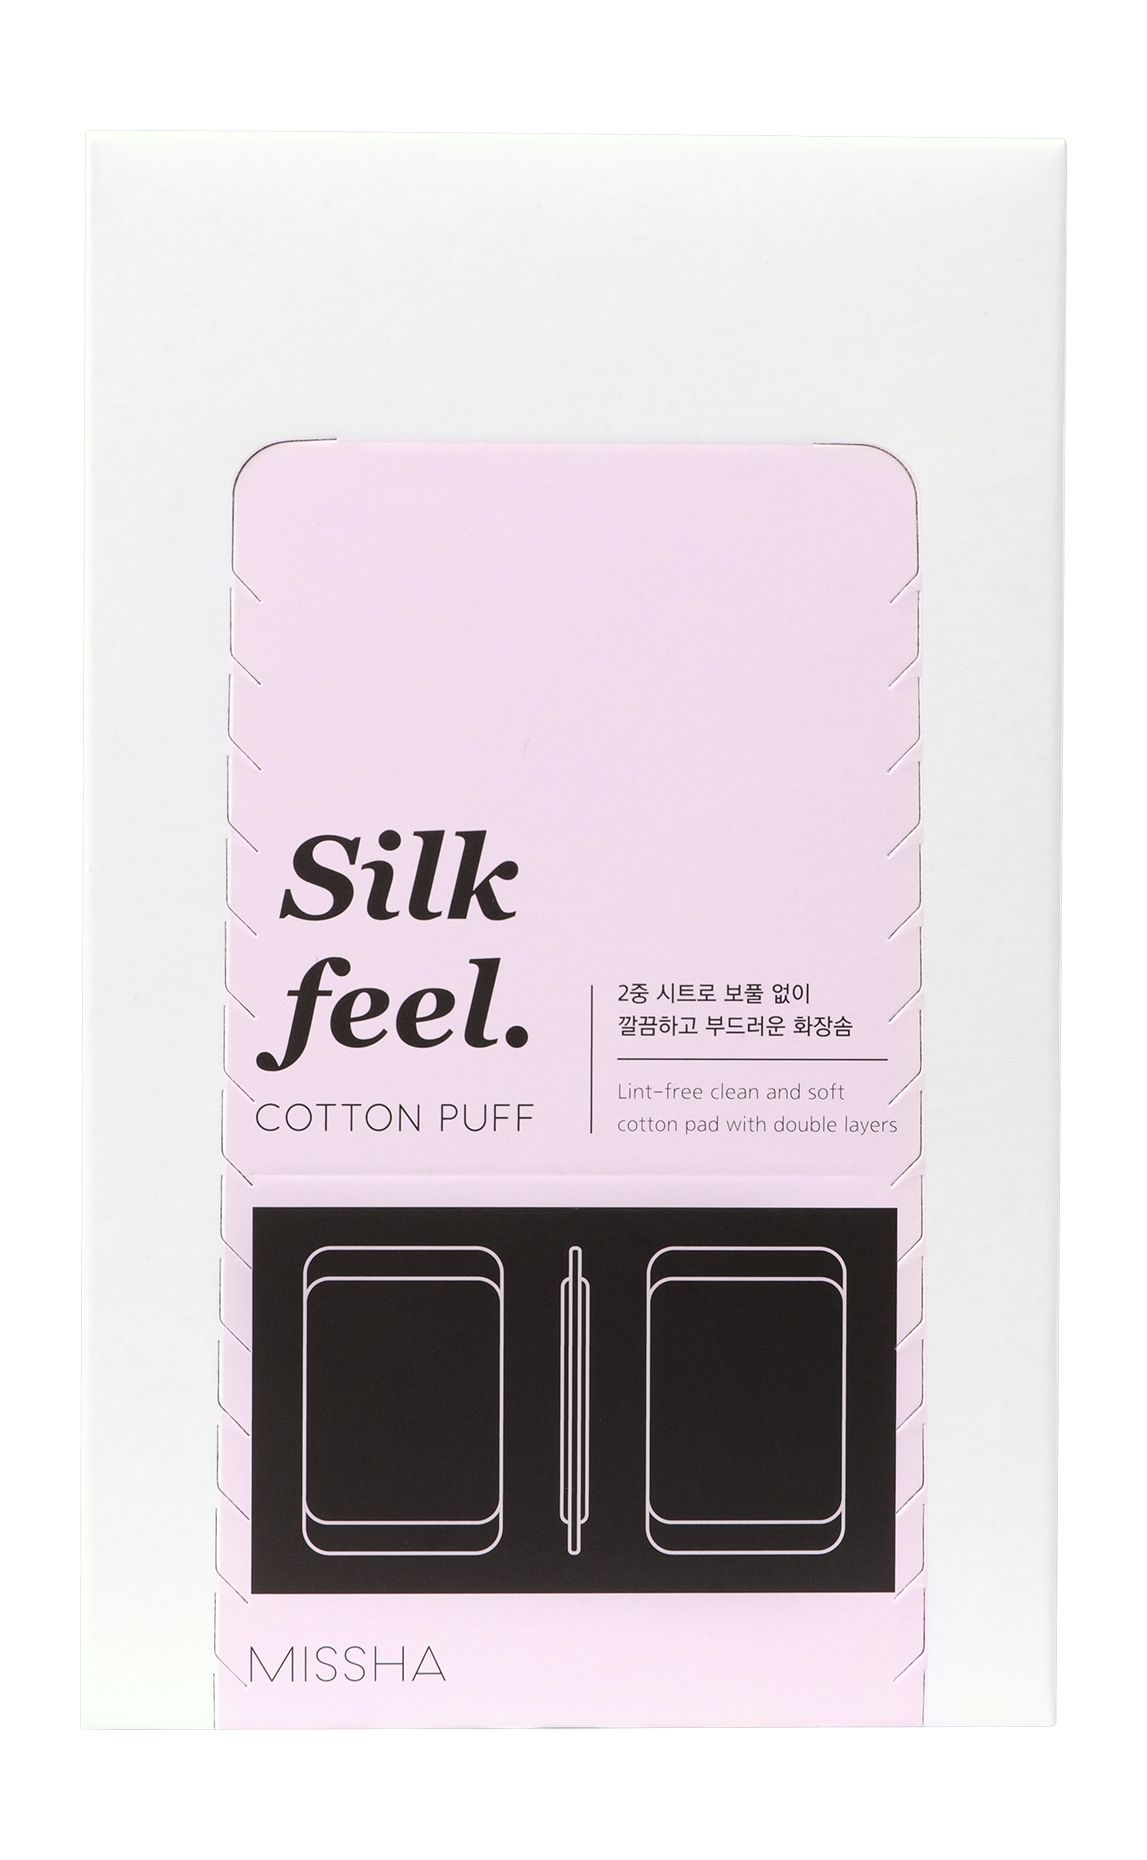 Silk feeling. Silk feeling открытка как выглядит. Обложка Silk feel книги фото.